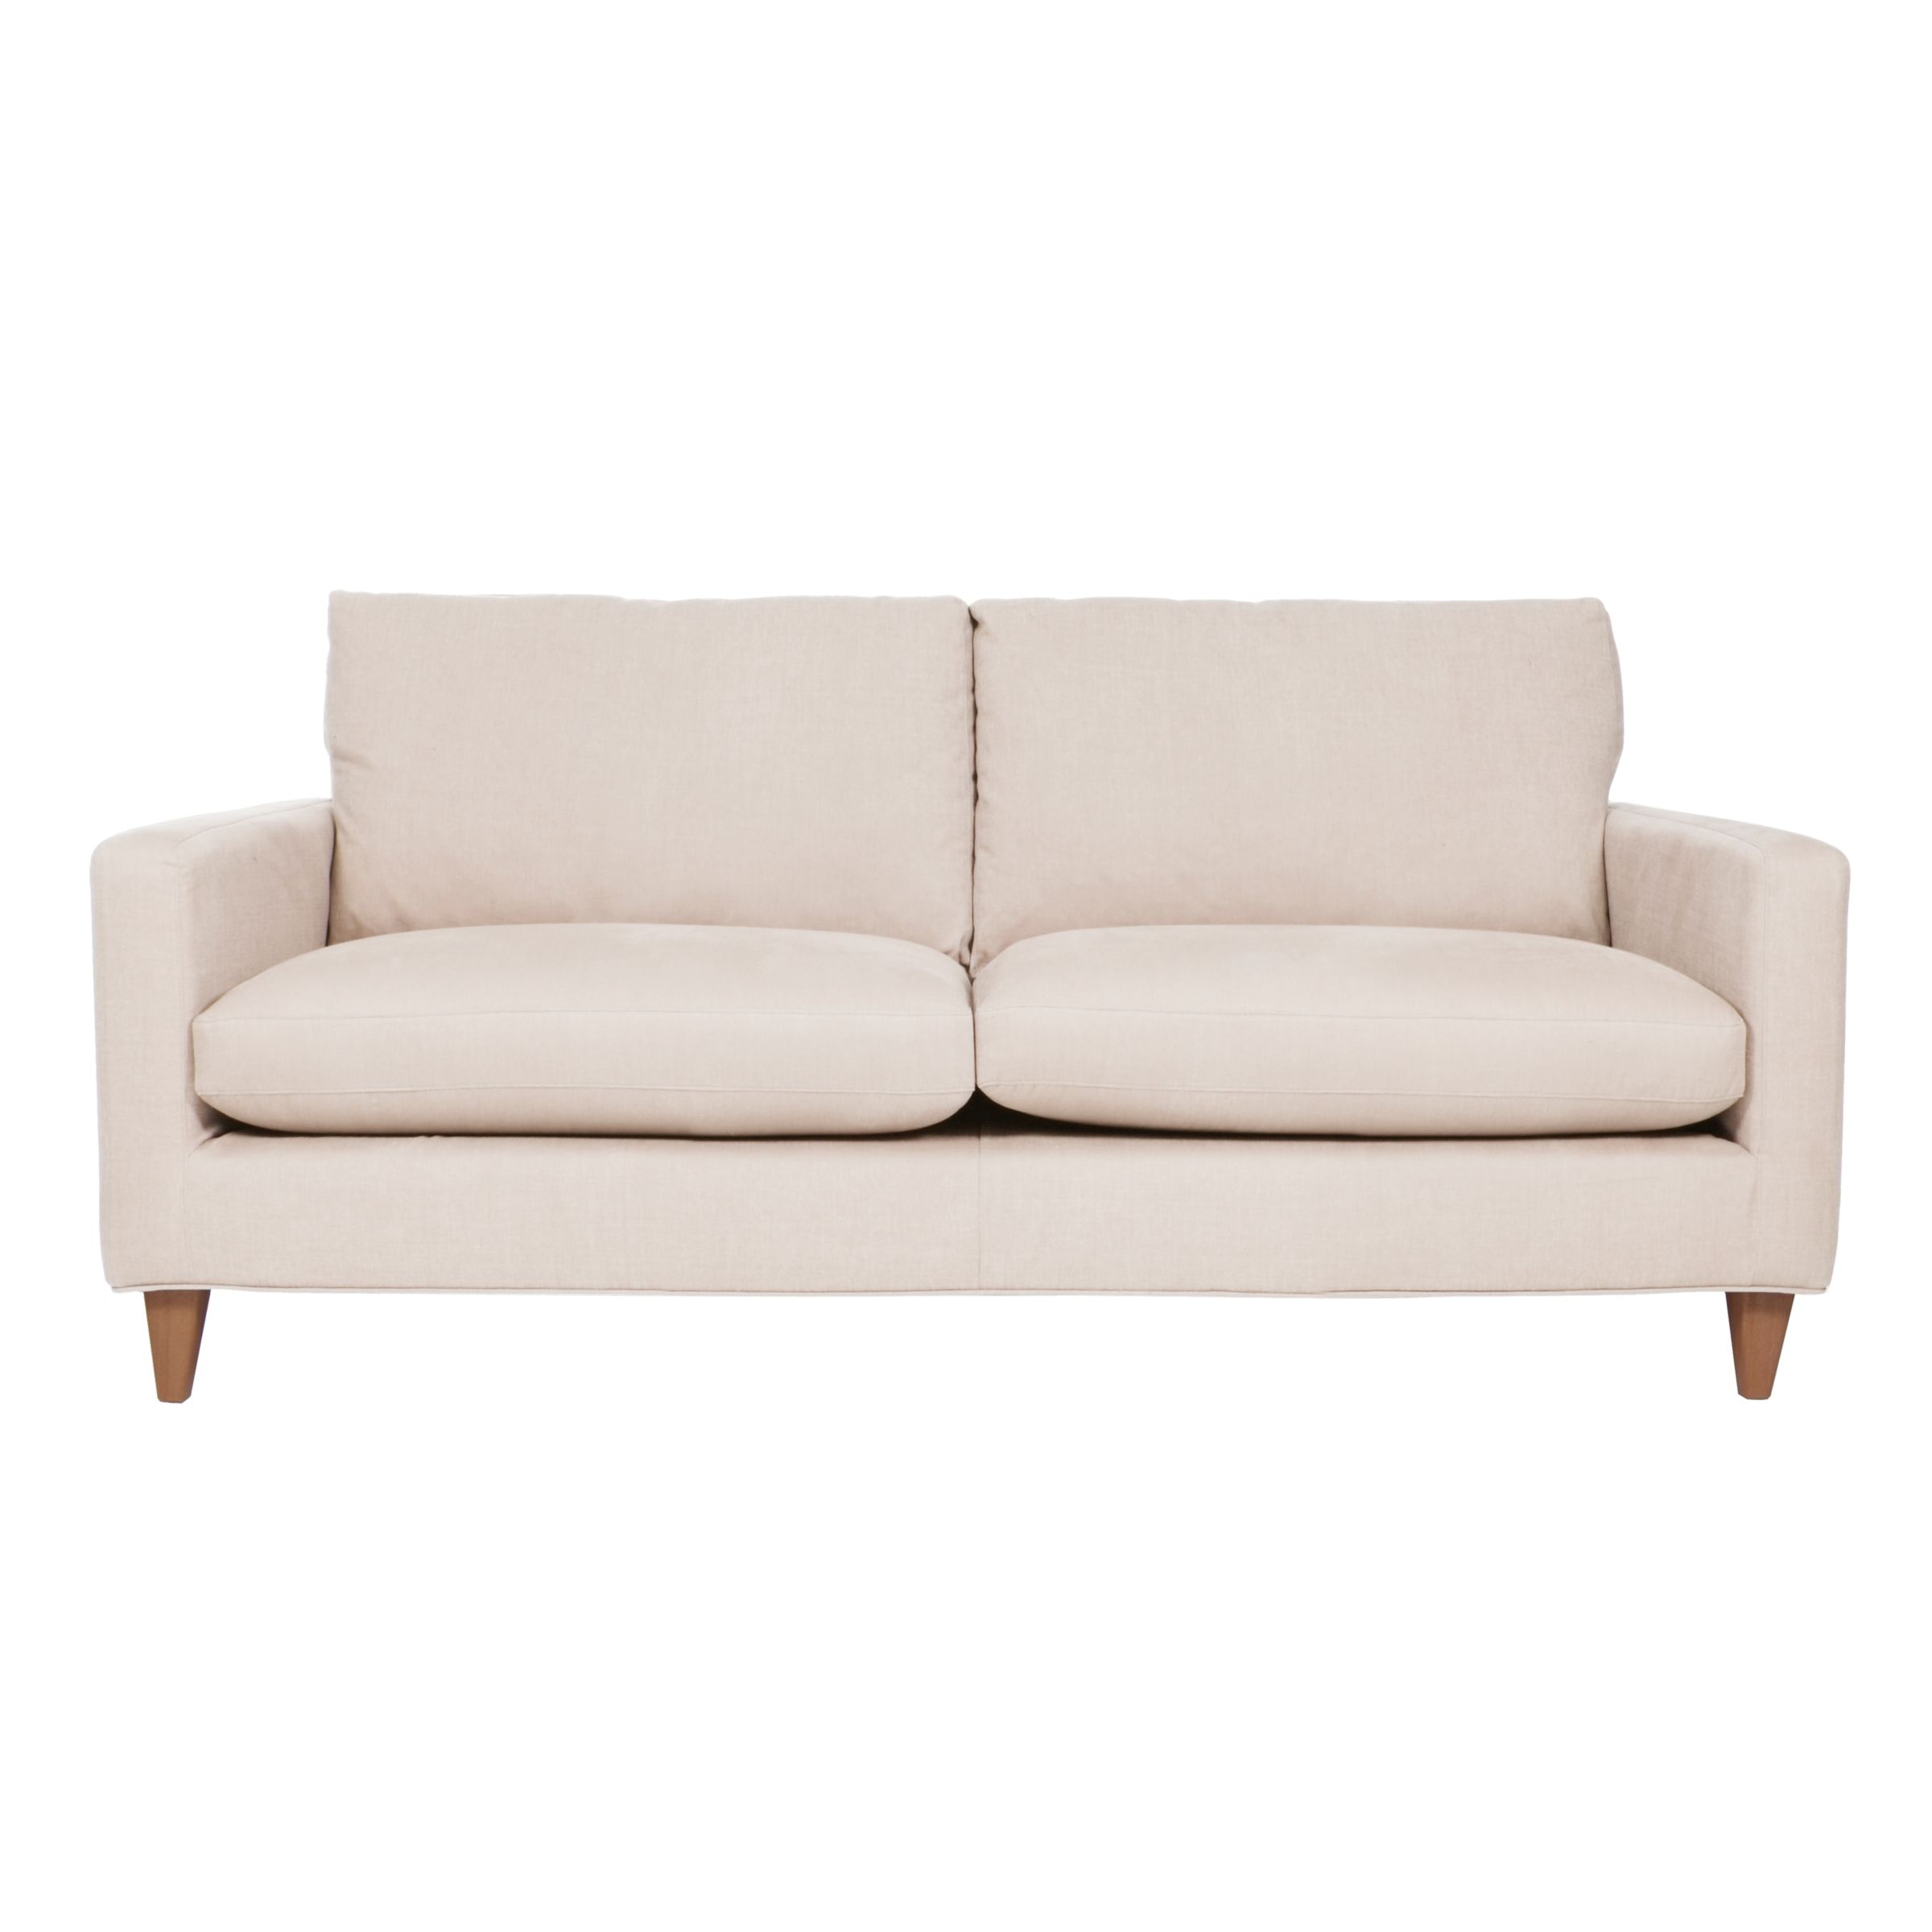 John Lewis Bailey Large Sofa, Linen, width 194cm